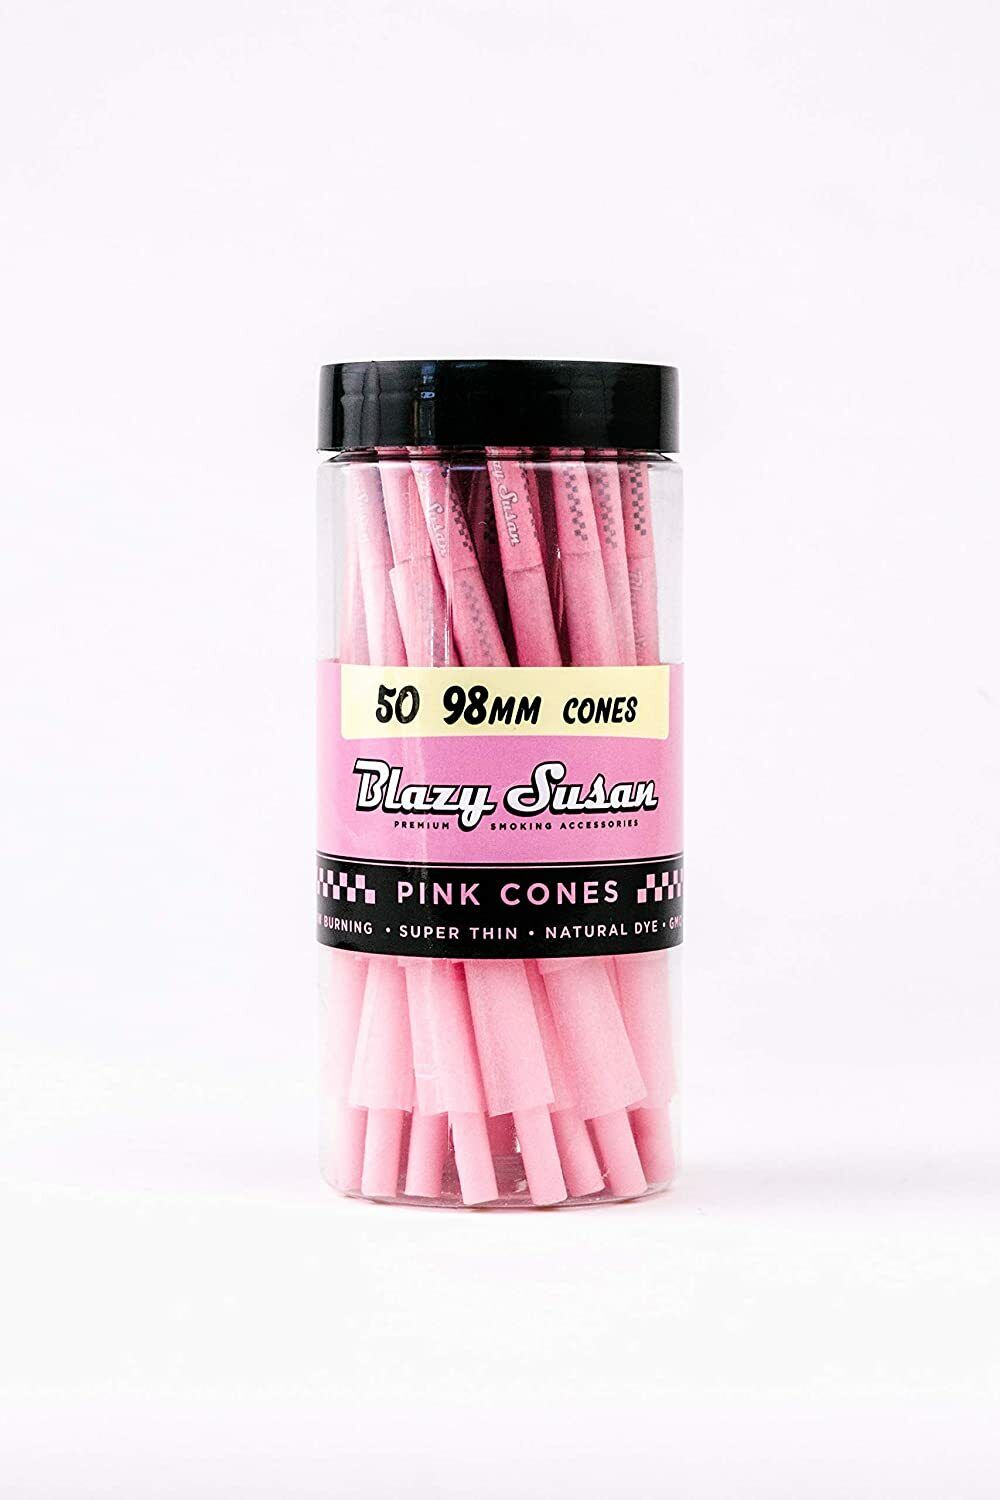 Blazy Susan Pink Cones 50ct Pack 98mm pre rolled Cones Vegan & Smooth Burning 